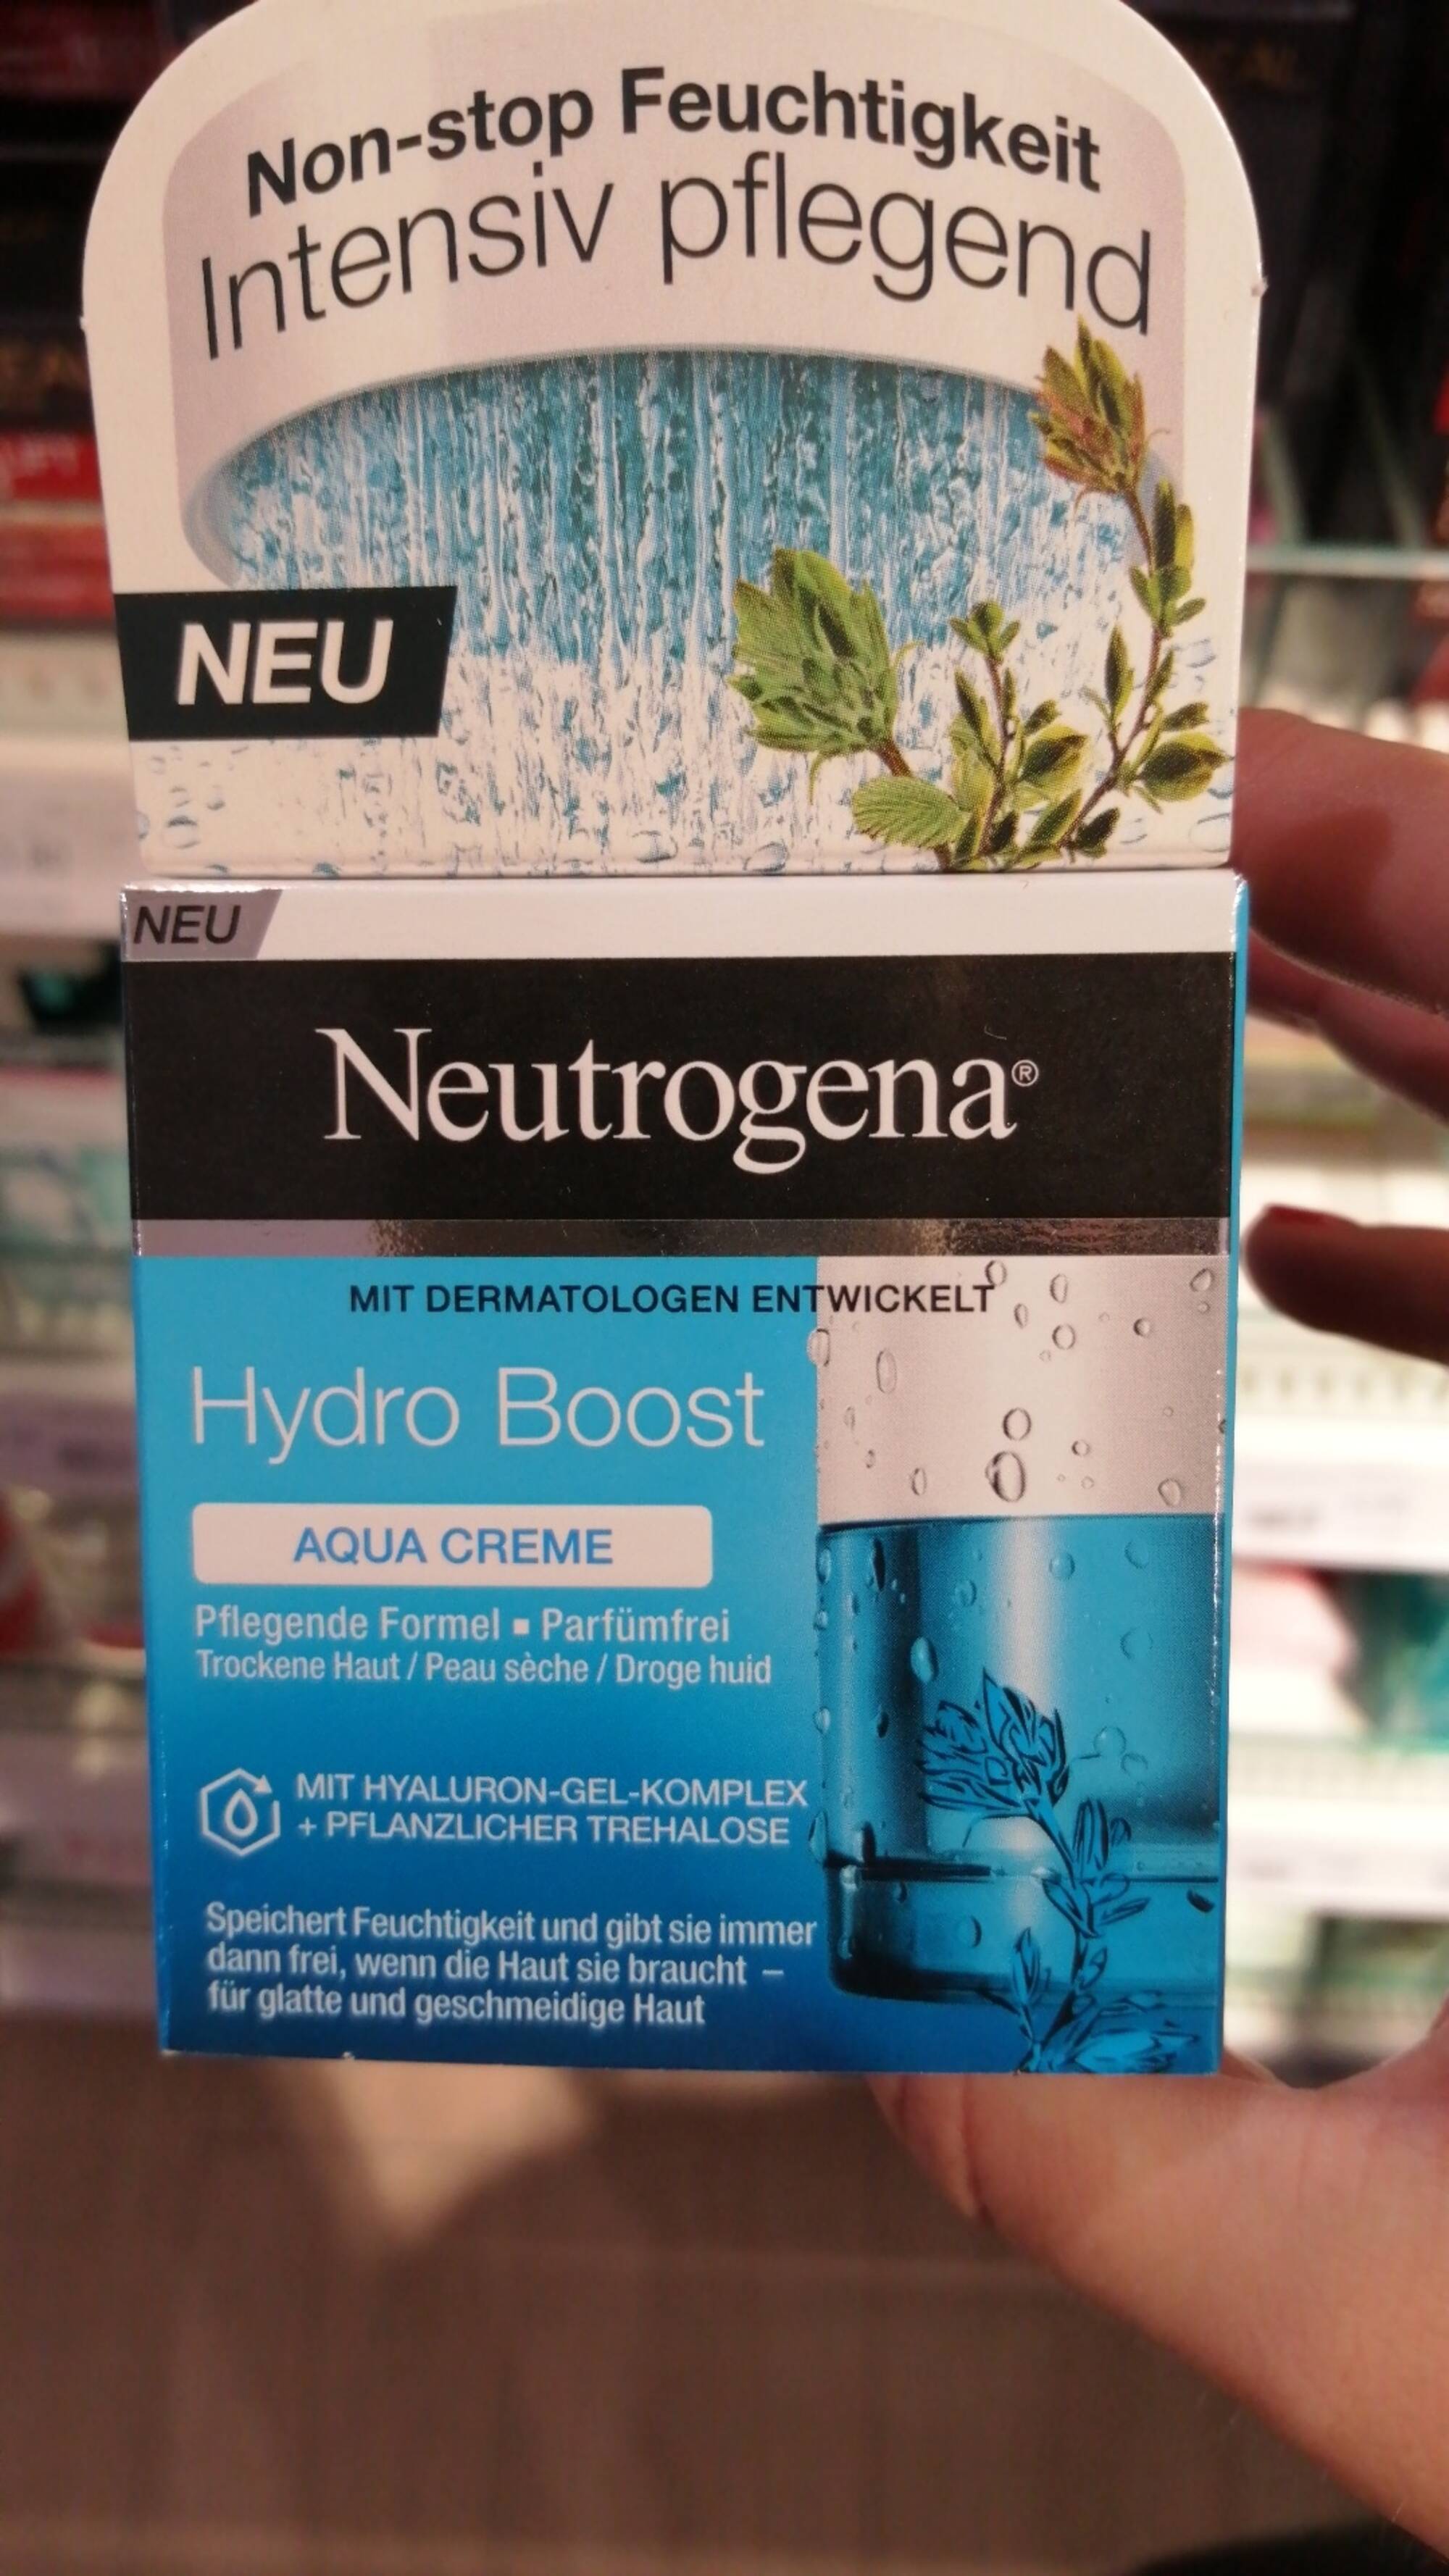 NEUTROGENA - Hydro boost - Aqua creme